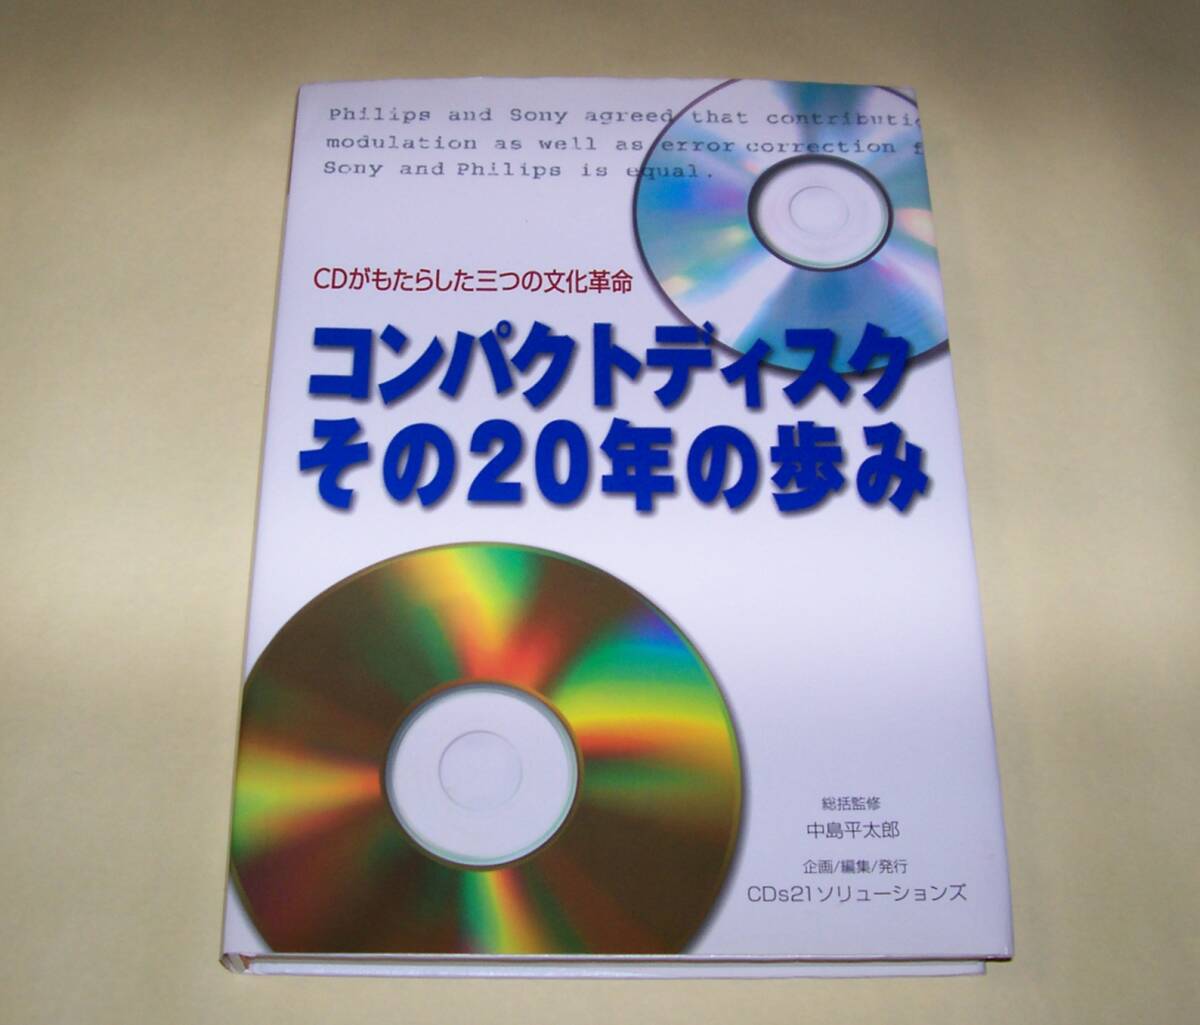 CDs21so дракон shonz compact диск эта 20 год. ..